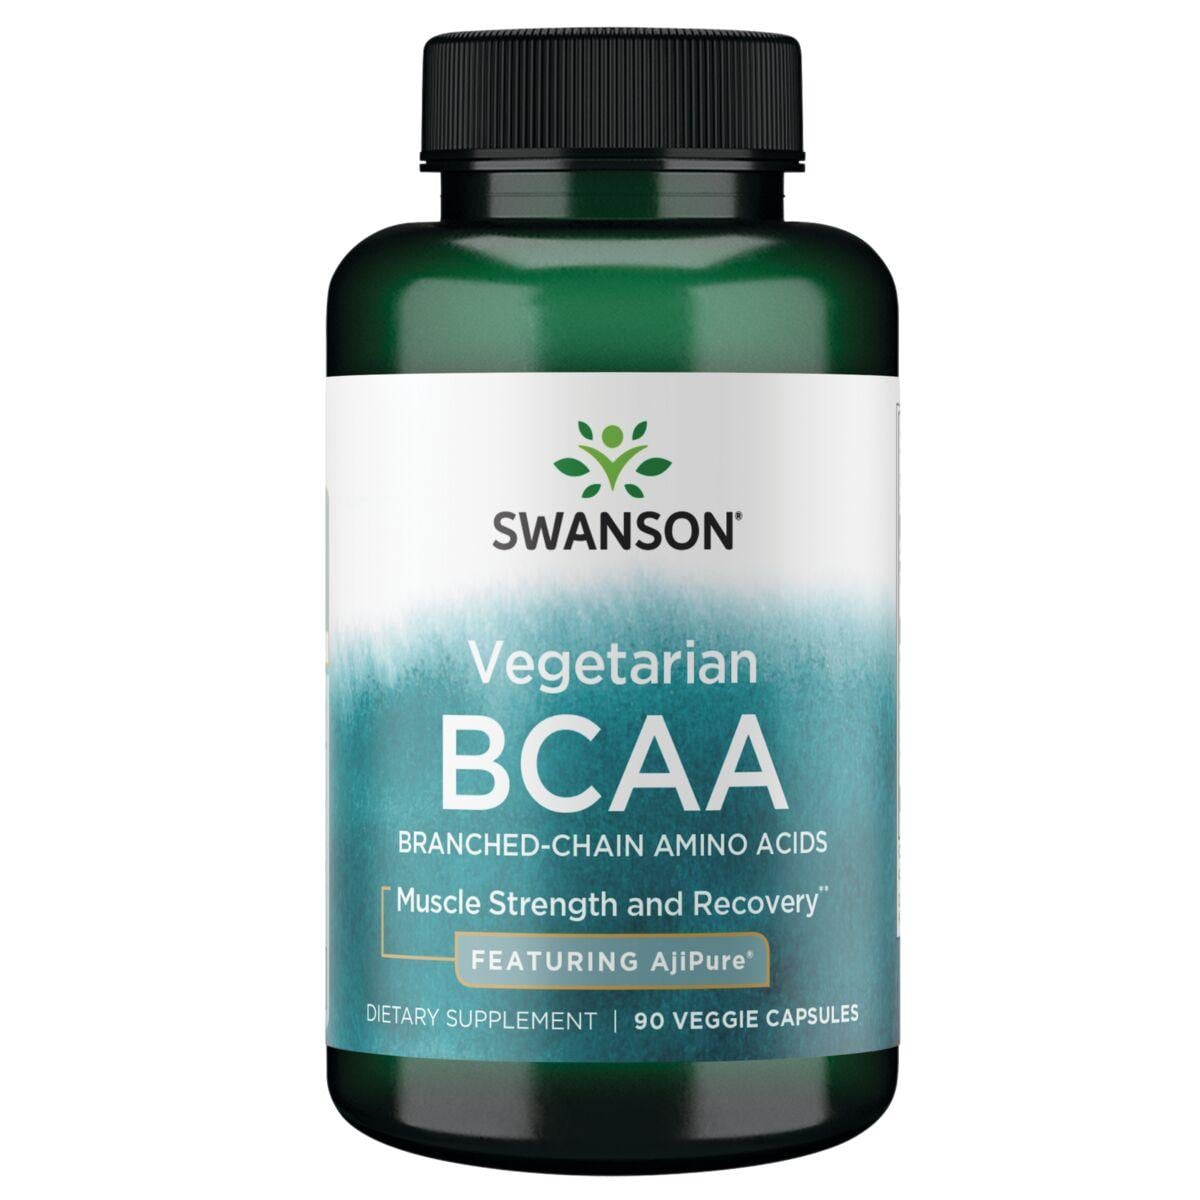 Swanson Ultra Vegetarian Bcaa - Featuring Ajipure Supplement Vitamin | 90 Veg Caps